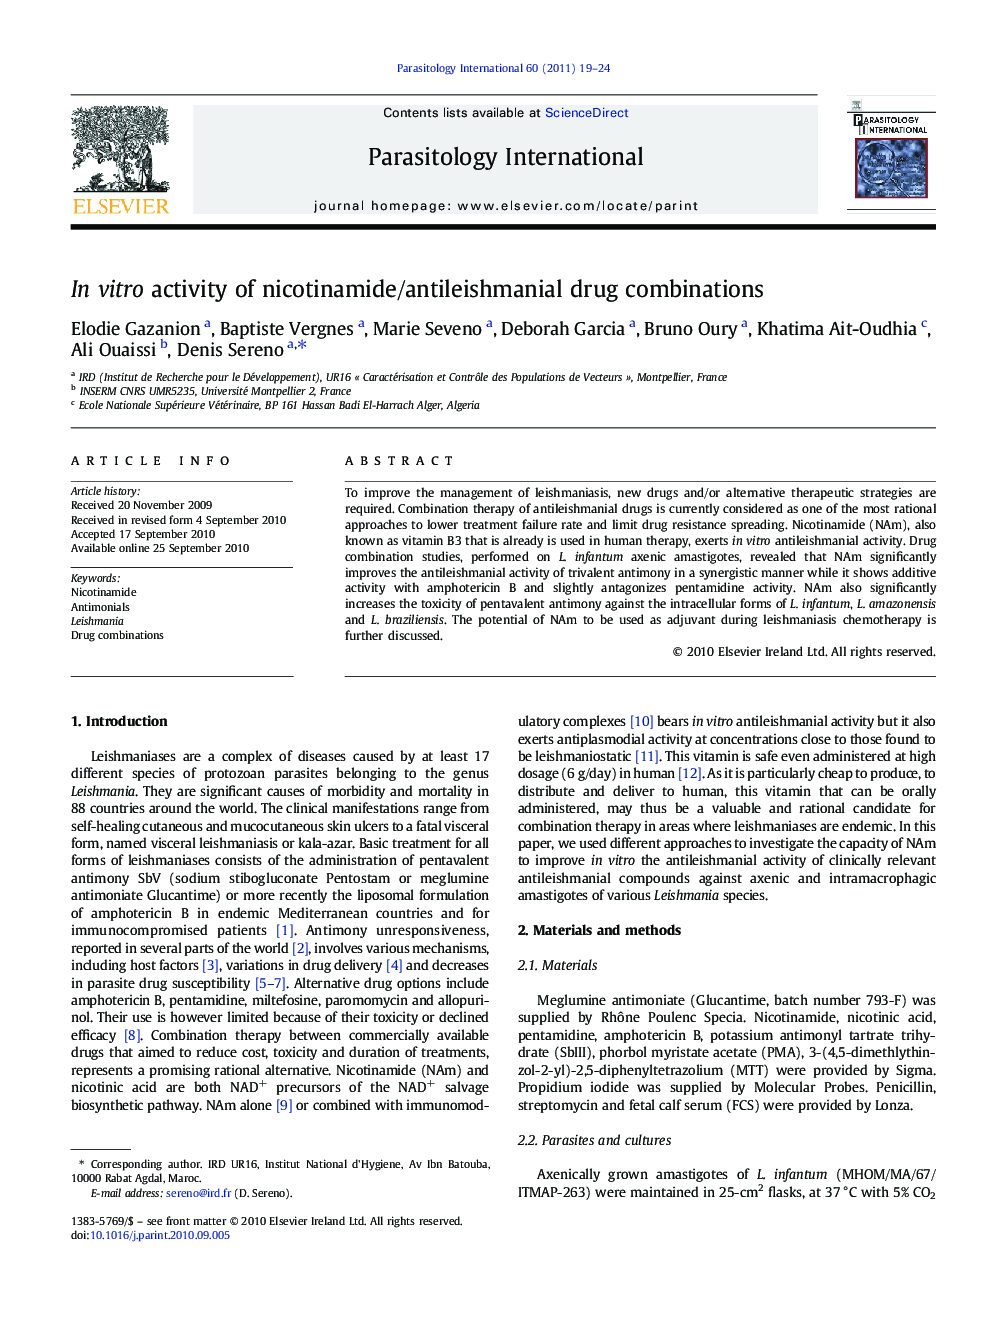 In vitro activity of nicotinamide/antileishmanial drug combinations